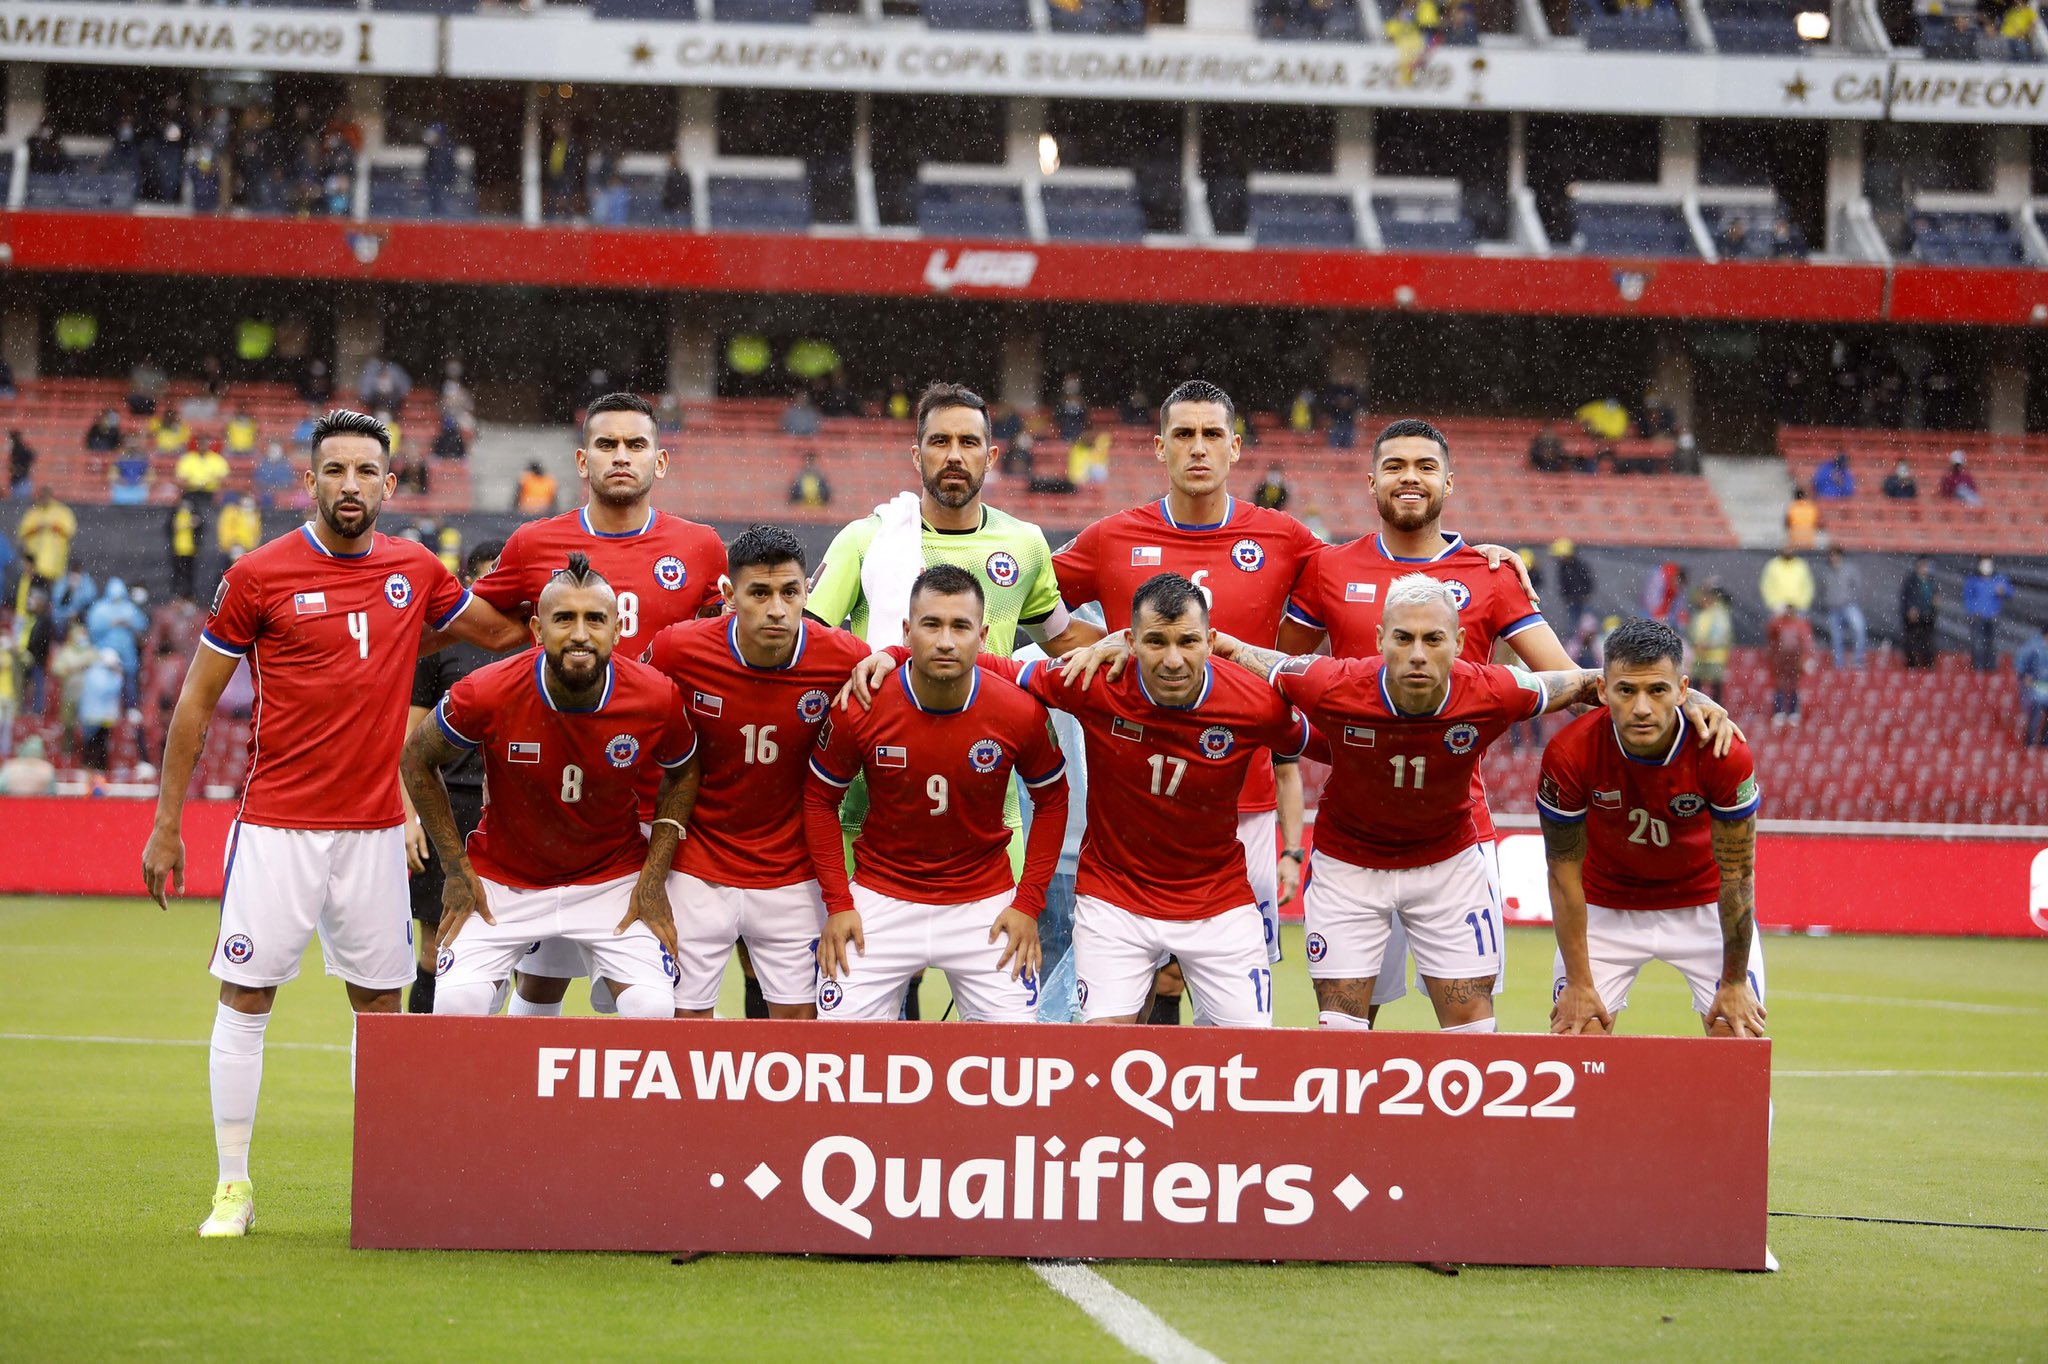 Formación de Chile ante Ecuador, Clasificatorias Catar 2022, 5 de septiembre de 2021